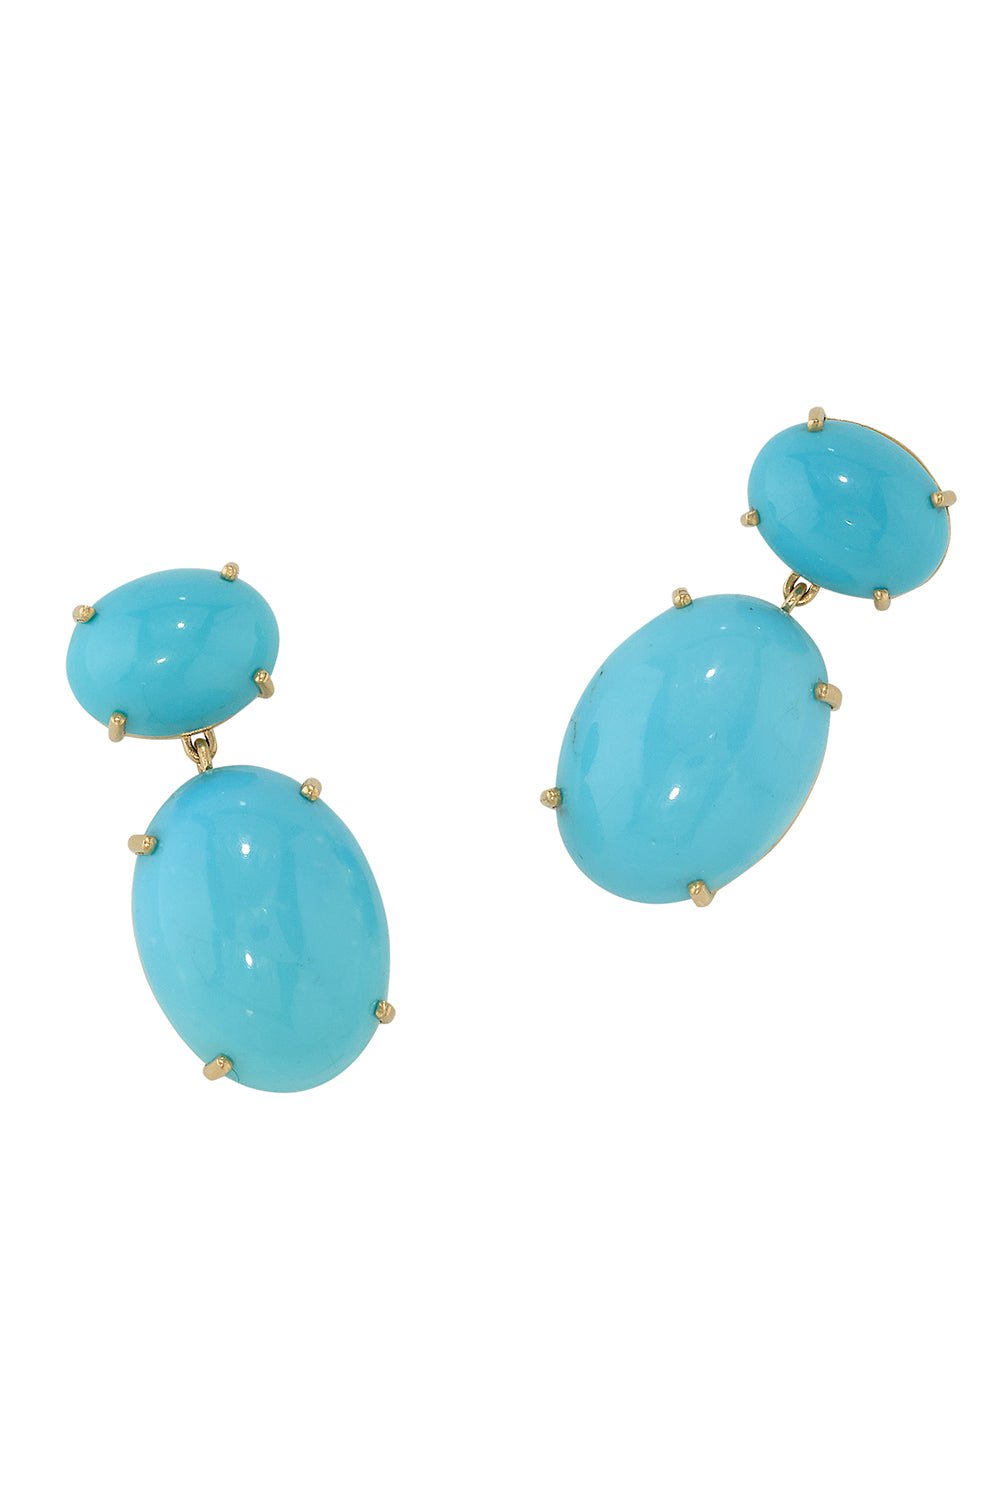 IRENE NEUWIRTH JEWELRY-Classic Kingman Turquoise Drop Earrings-YELLOW GOLD